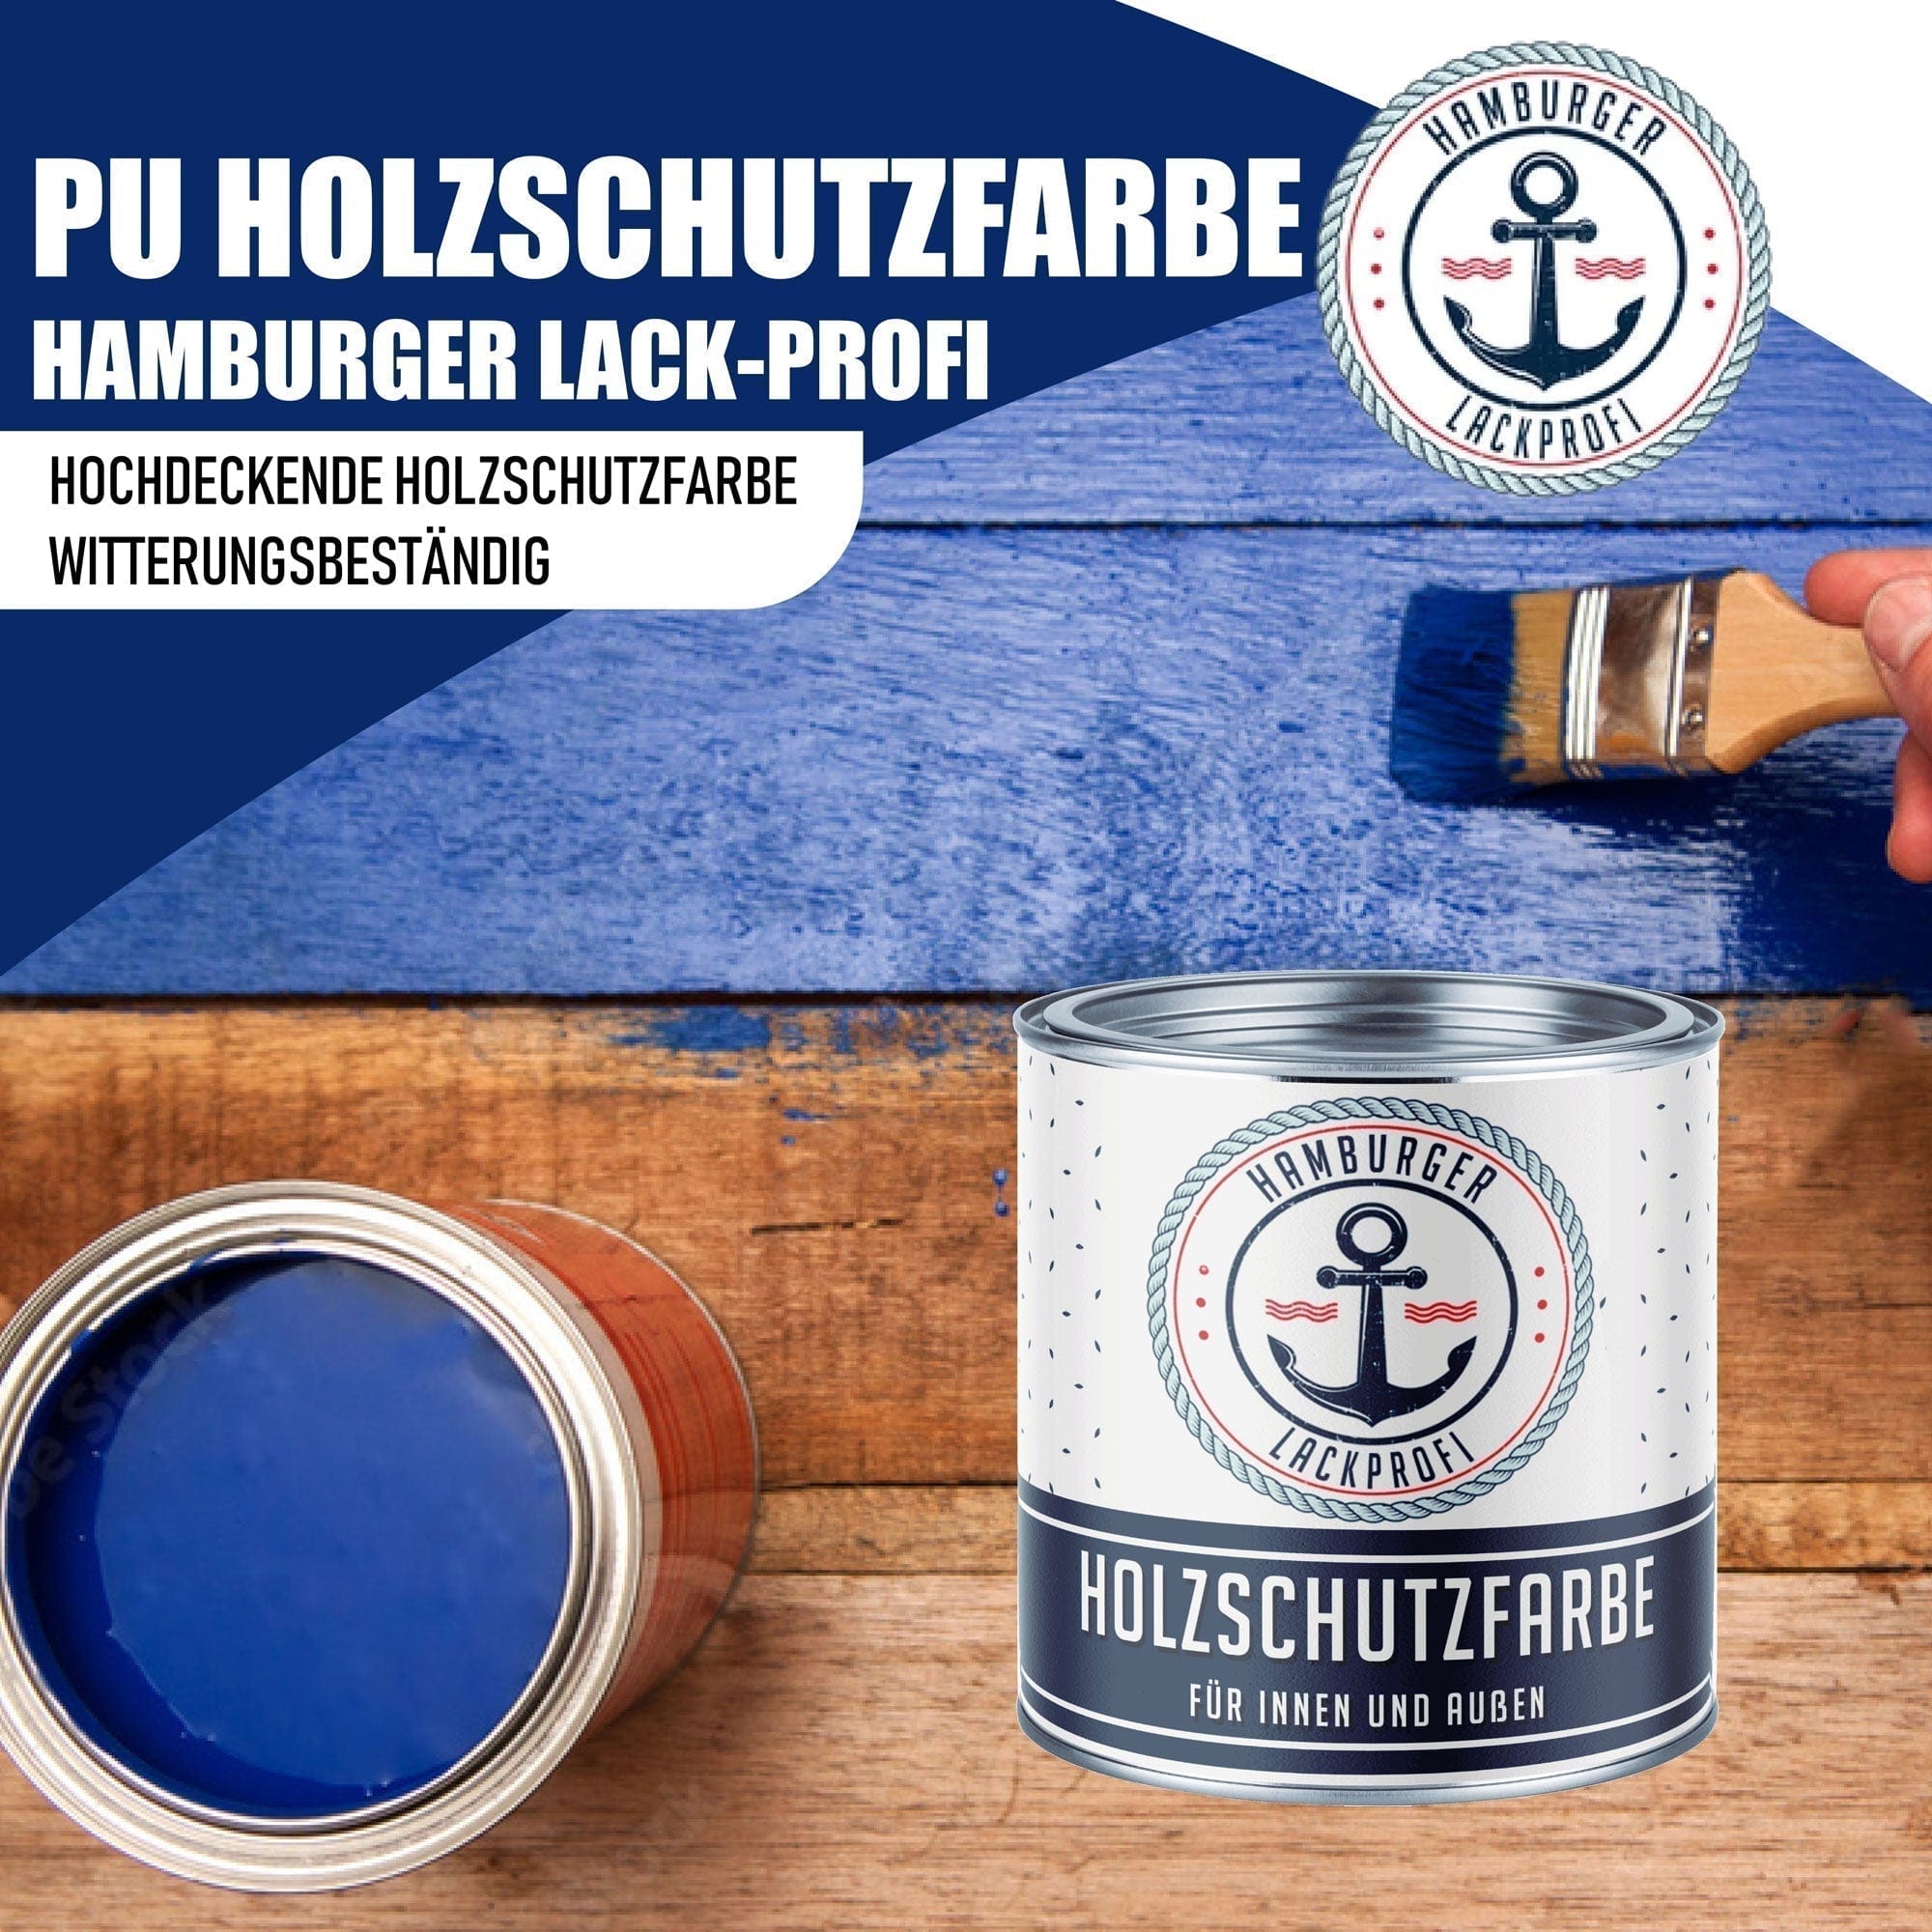 Hamburger Lack-Profi Lacke & Beschichtungen PU Holzschutzfarbe RAL 7035 Lichtgrau - Wetterschutzfarbe